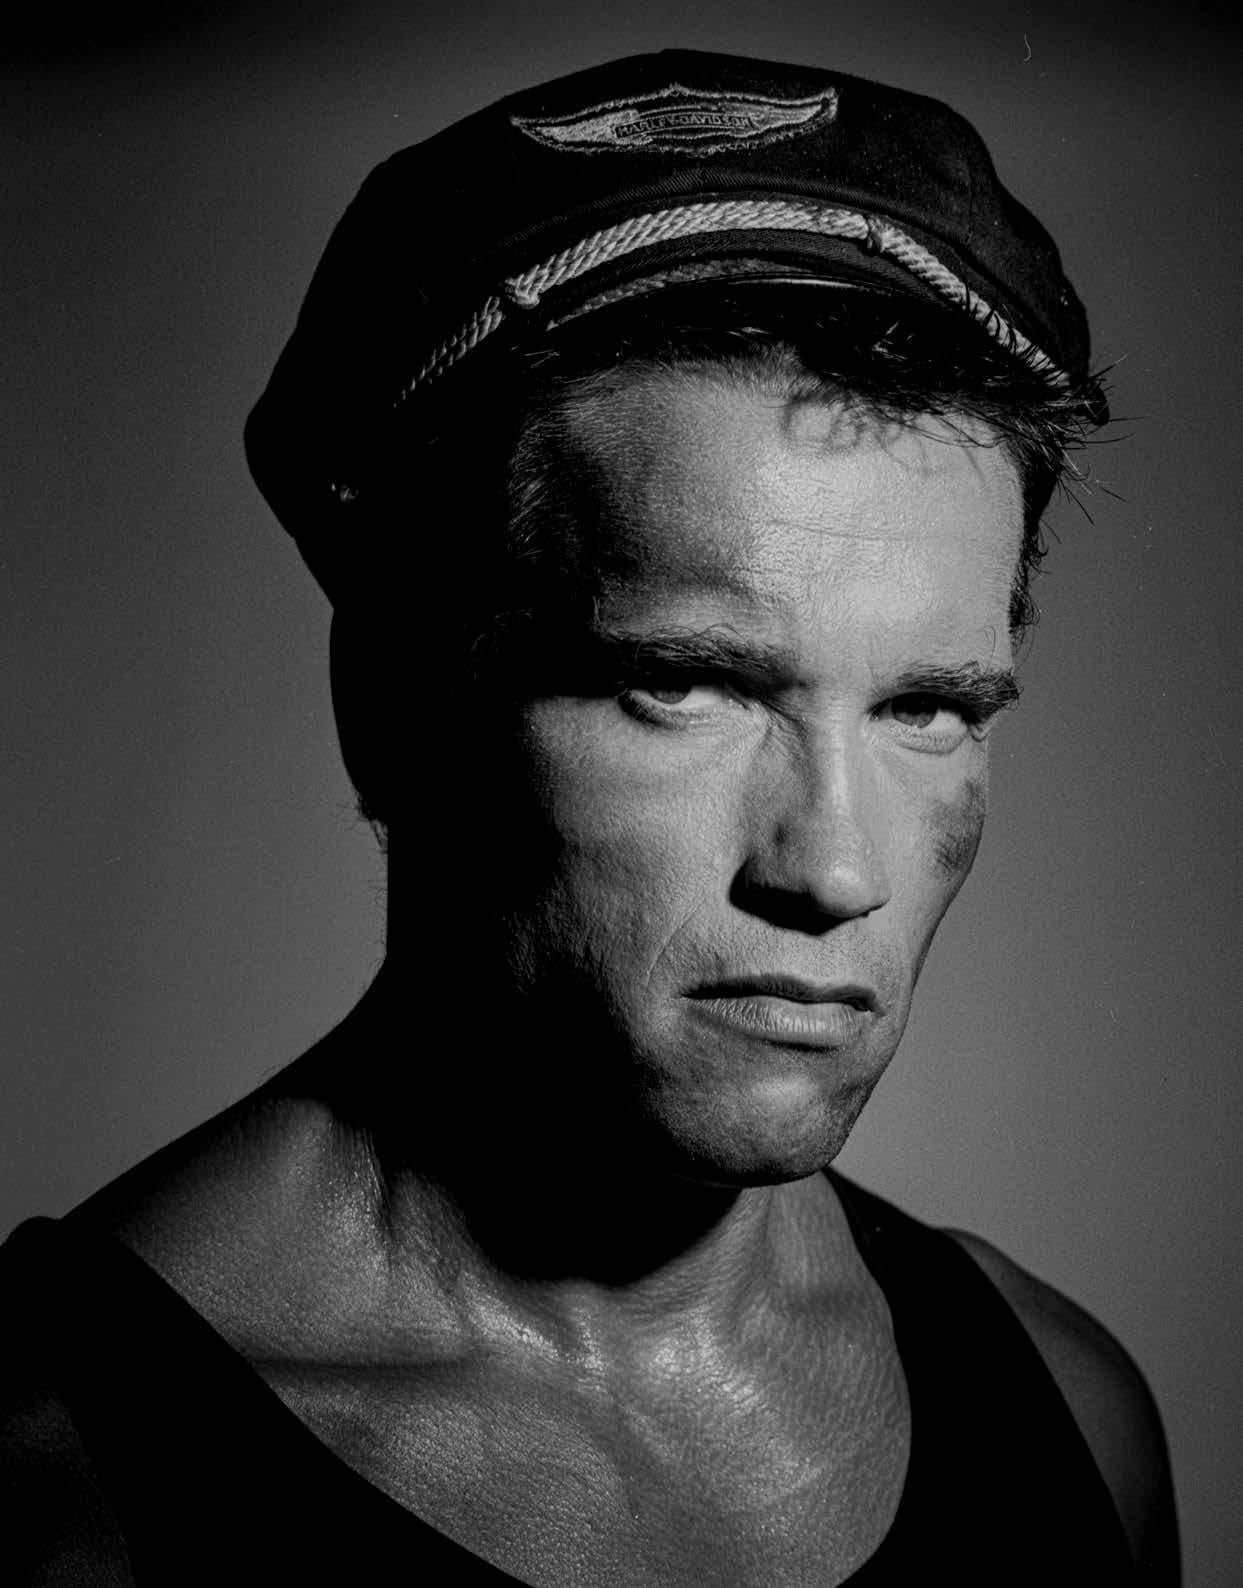 Greg Gorman Portrait Photograph – Arnold Schwarzenegger, Zeitgenössischer Künstler, Prominenter, Fotografie, Porträt